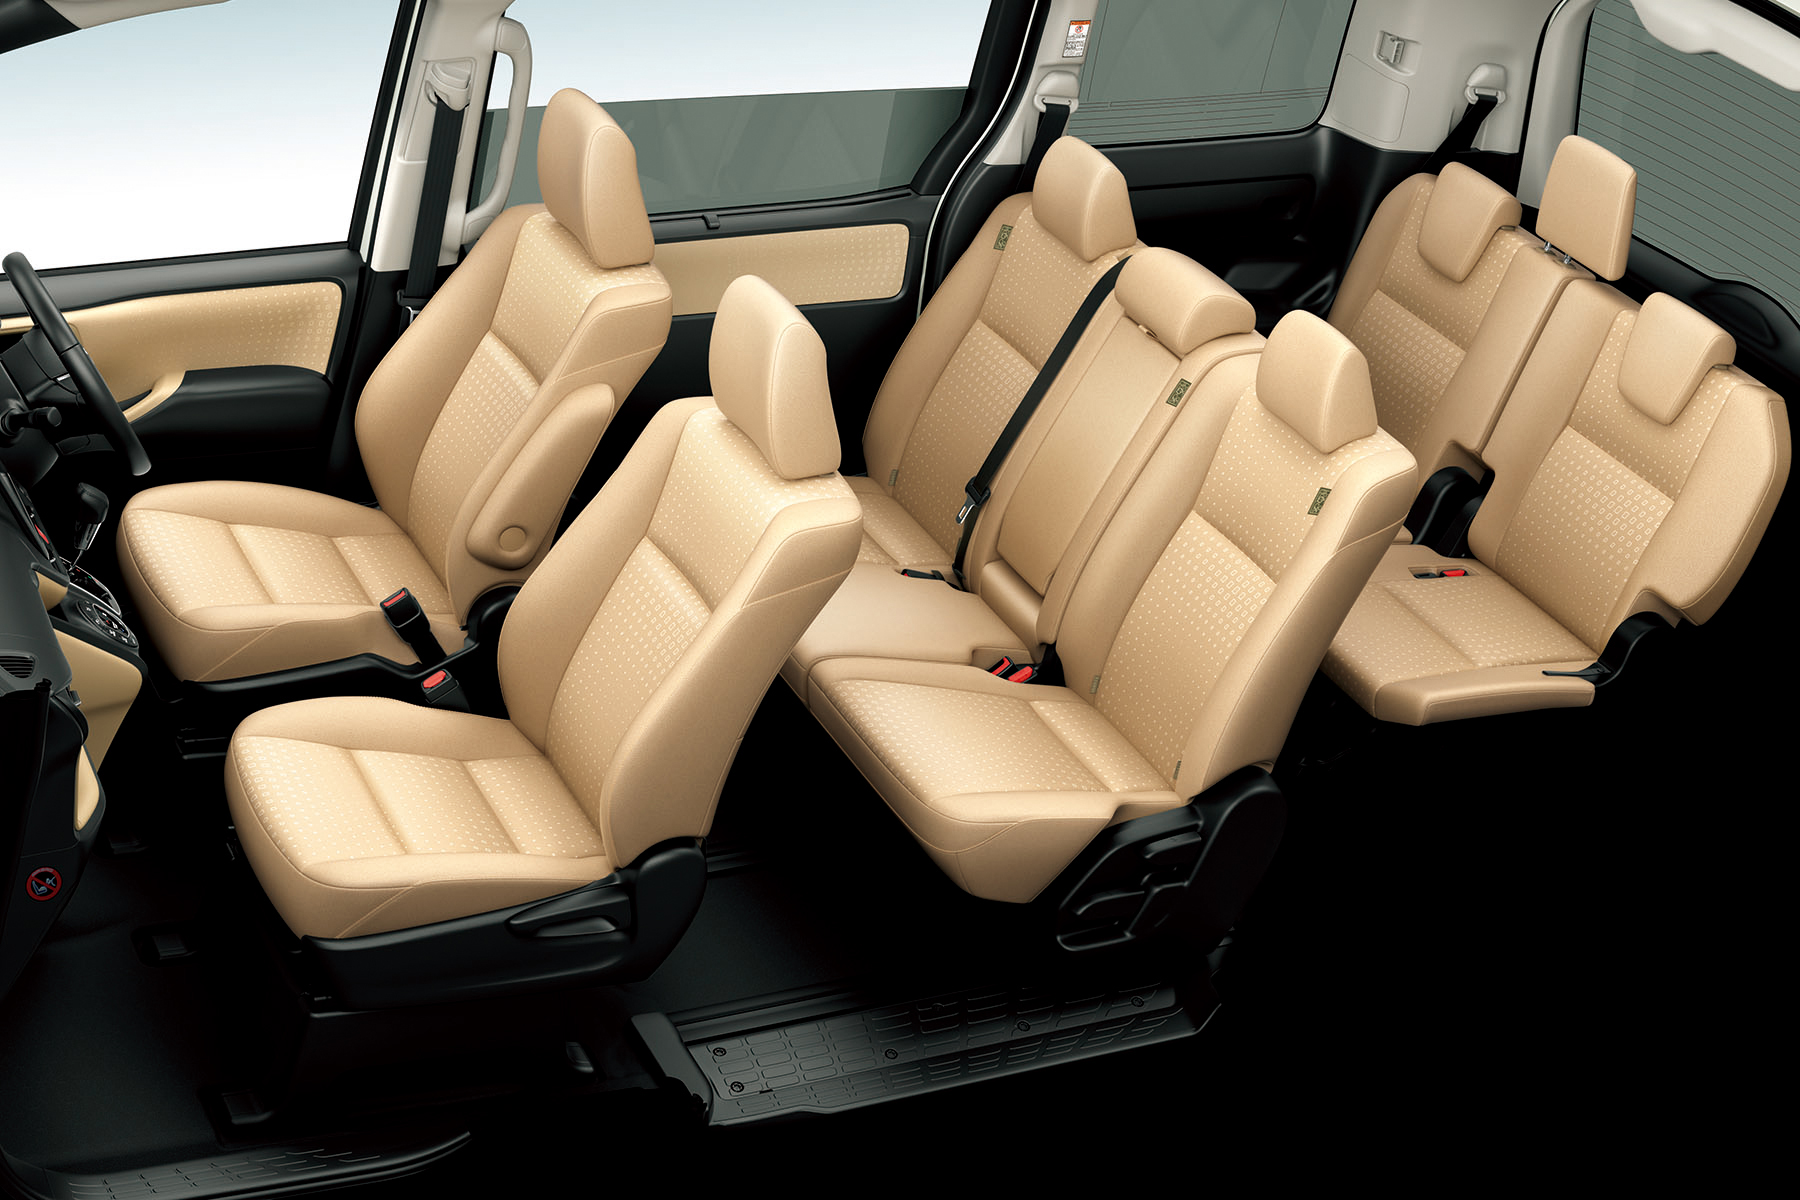 G 8人乗り 2wd 内装色 アイボリー オプション装着車 トヨタ自動車株式会社 公式企業サイト